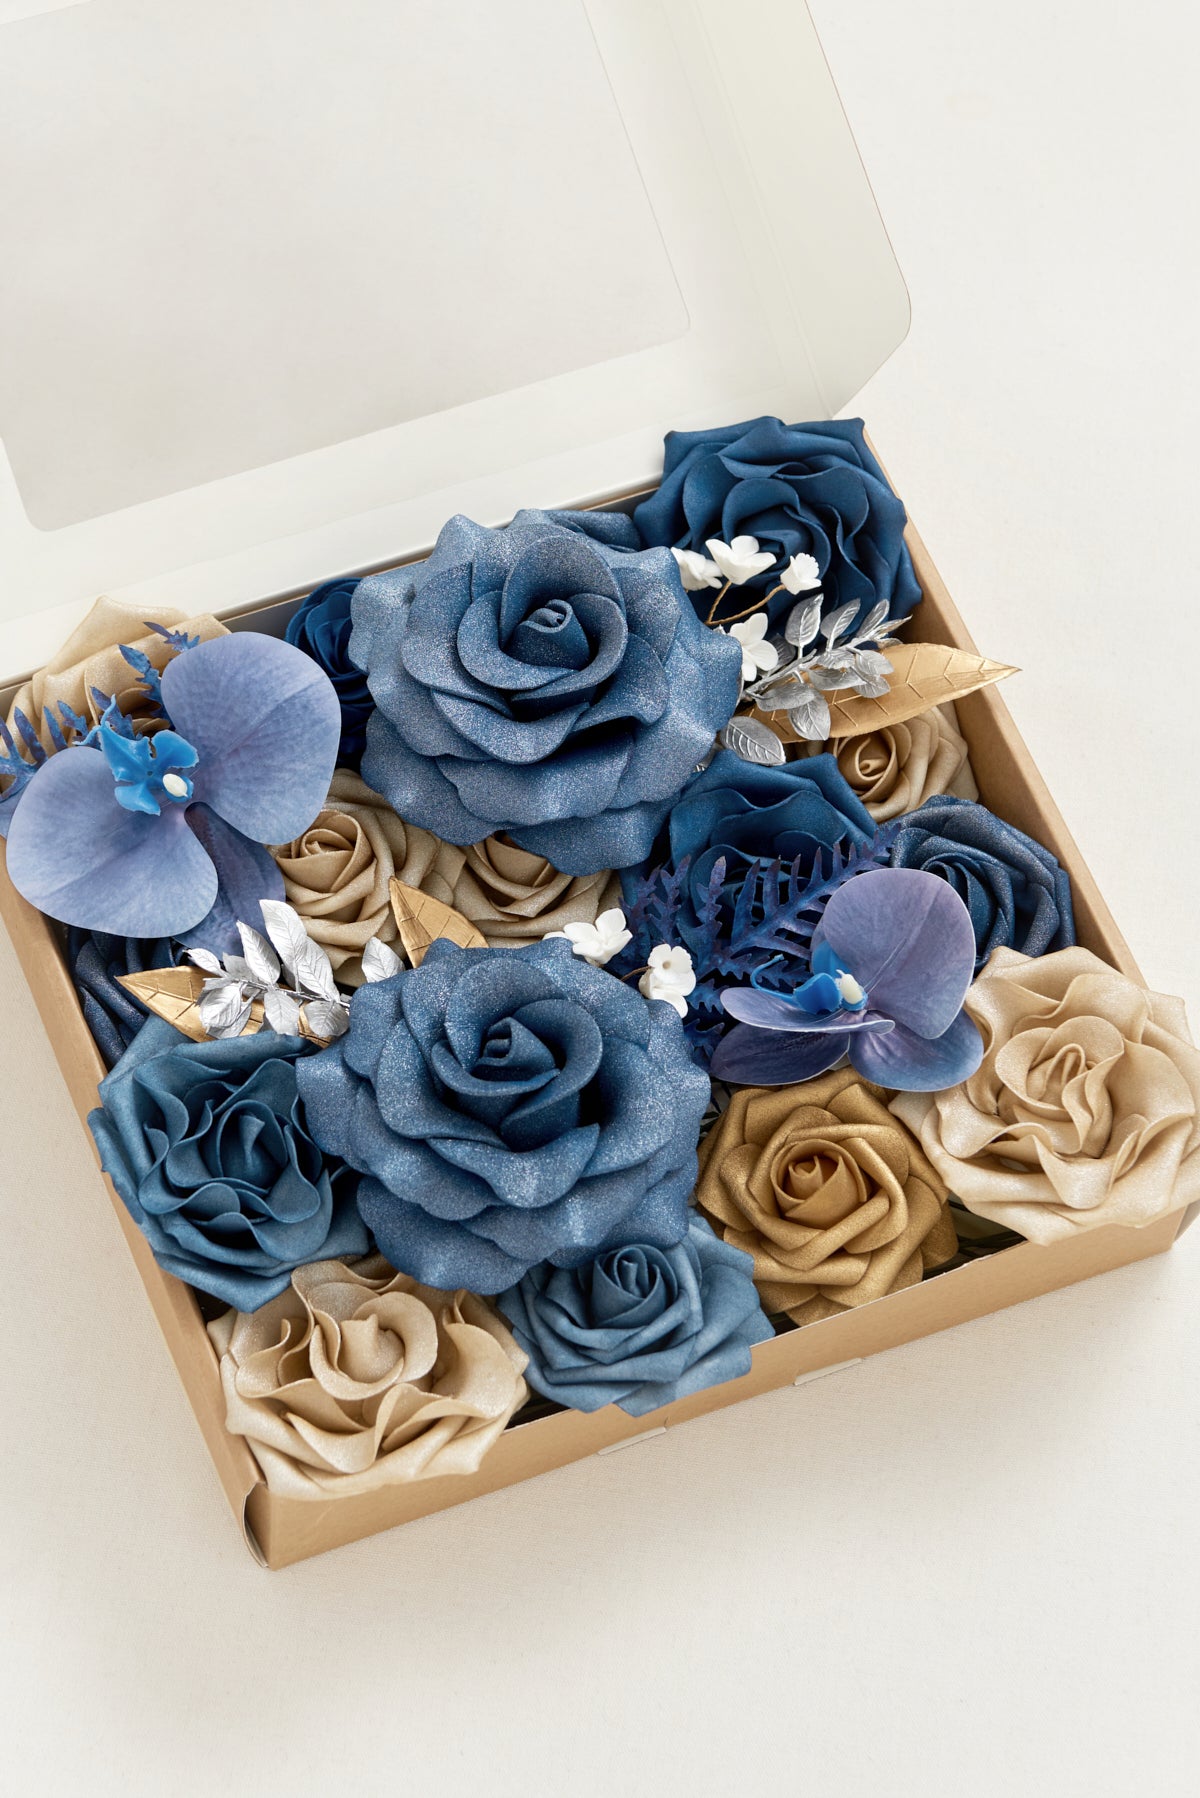 DIY Designer Flower Boxes in Stately Navy & Gold